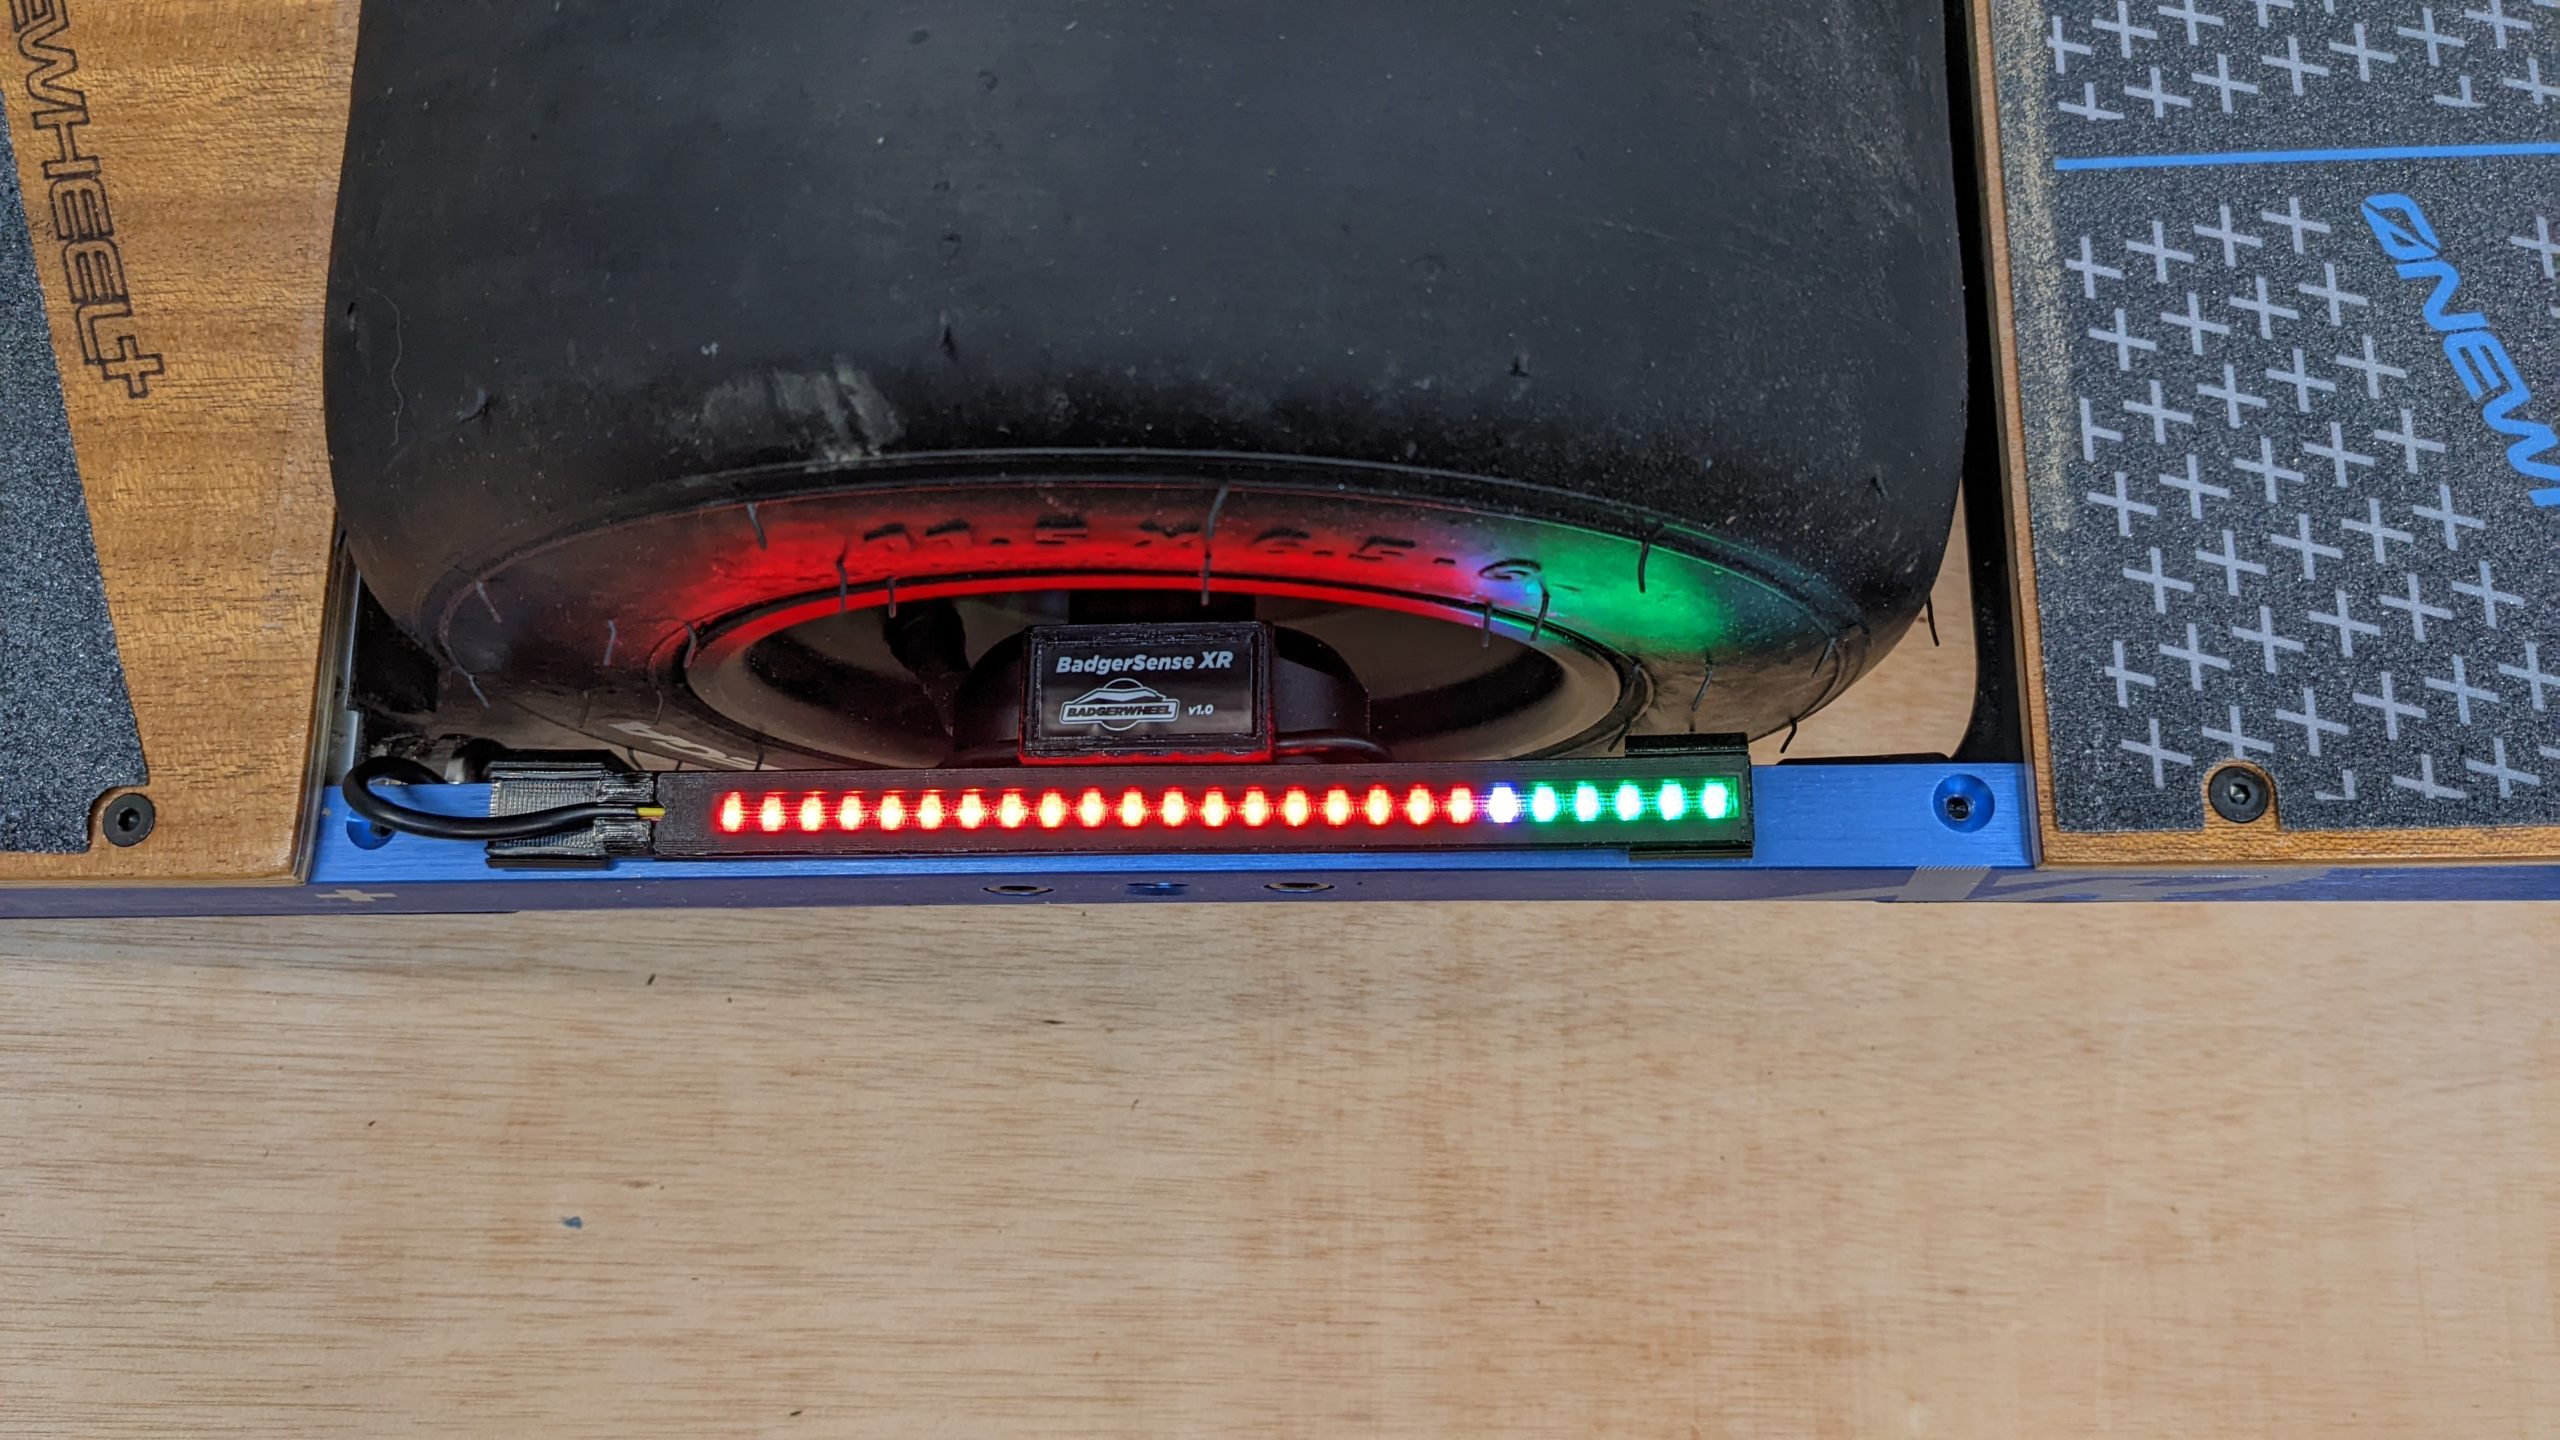 BadgerSense LED light bar shows high motor usage approaching nosedive